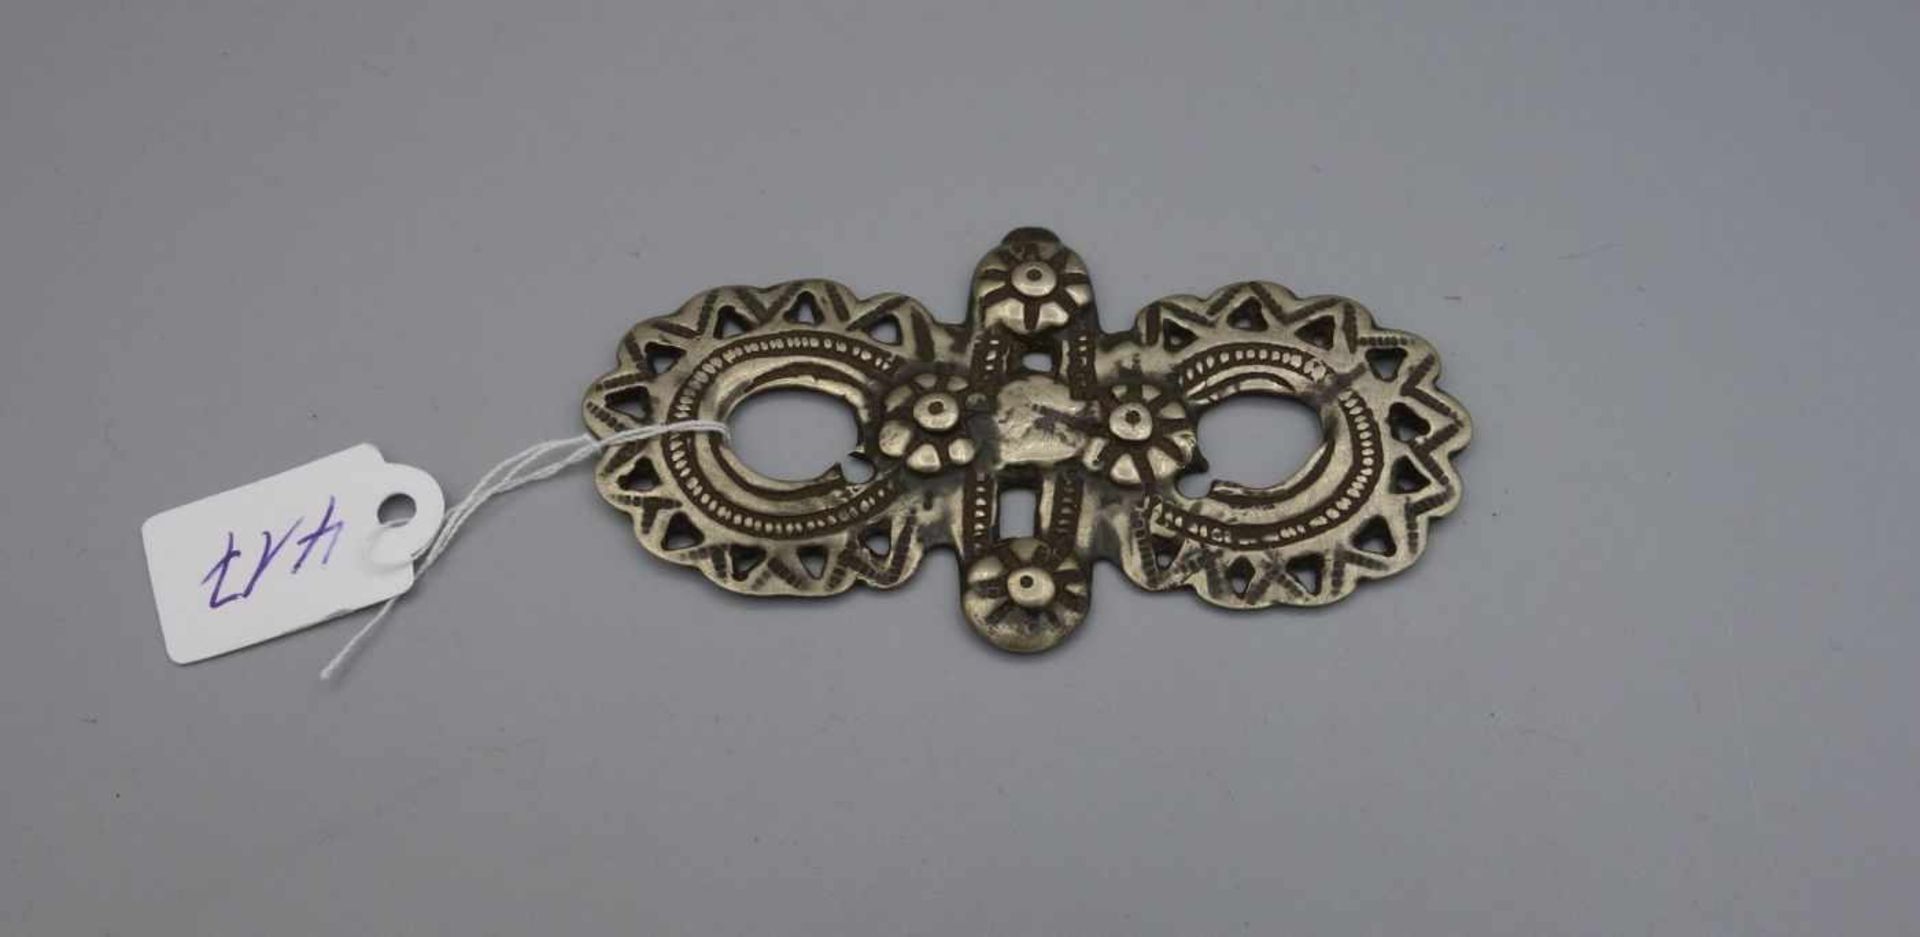 BERBERSCHMUCK DER TUAREG: Silberne Spange / brooch, Marokko, 20. Jh., Silber, Gewicht: 28,01 g.